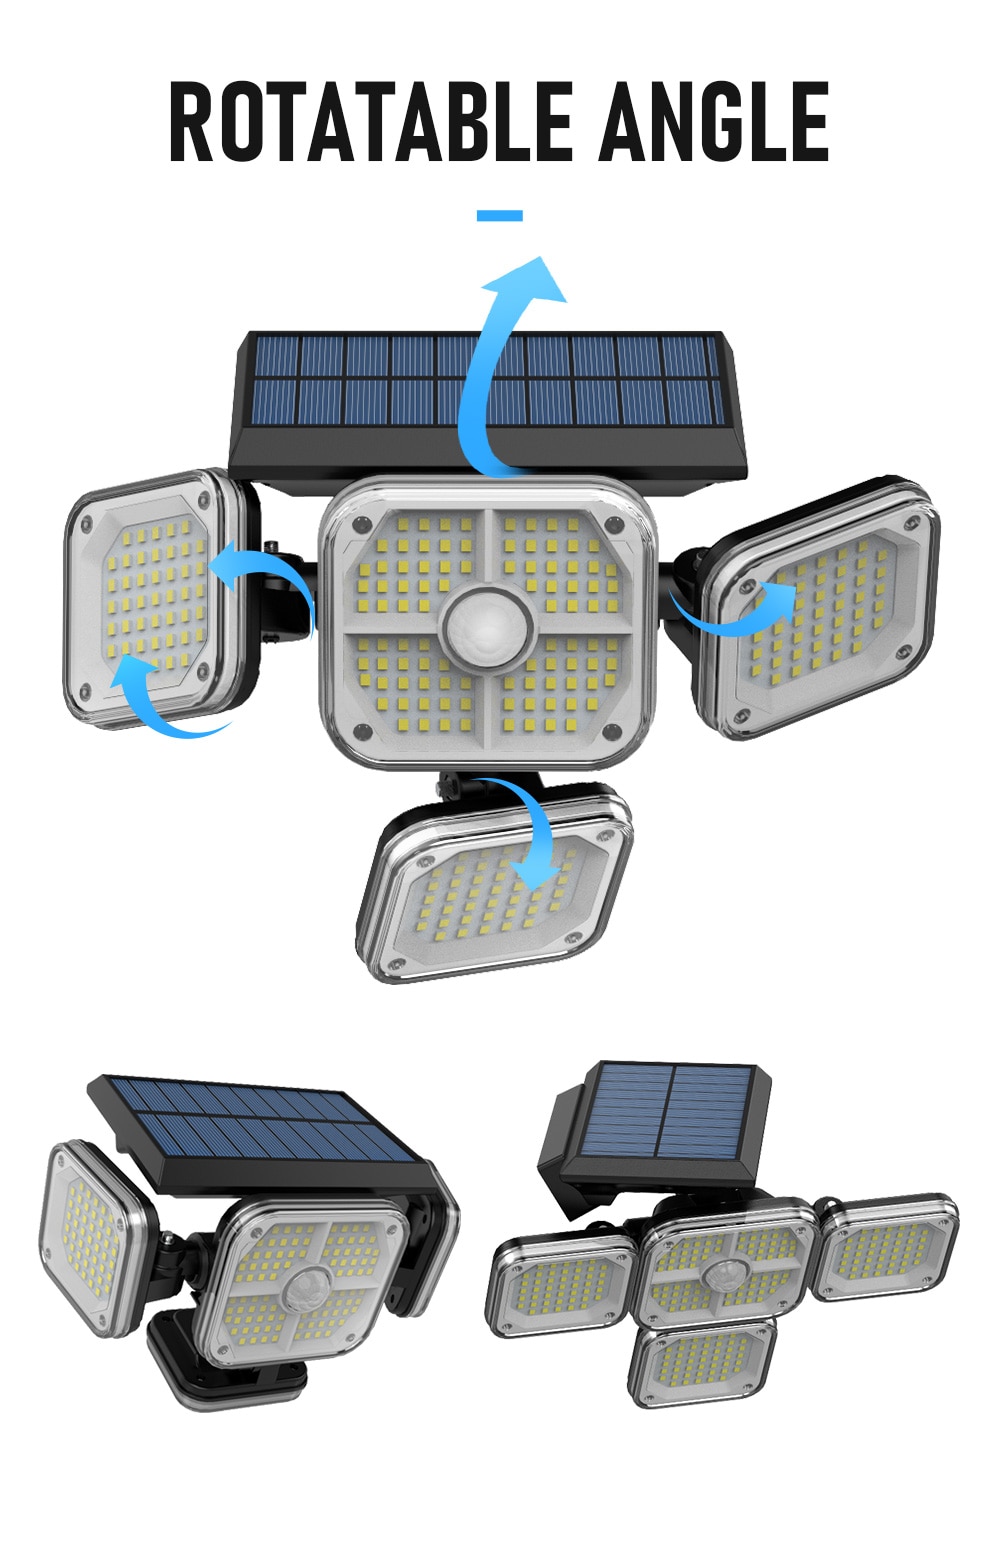 168/181/186/228/231 LED Outdoor Solar Lights Motion Sensor Wide Angle Lighting Remote Control Waterproof Solar Garden Wall Lamp